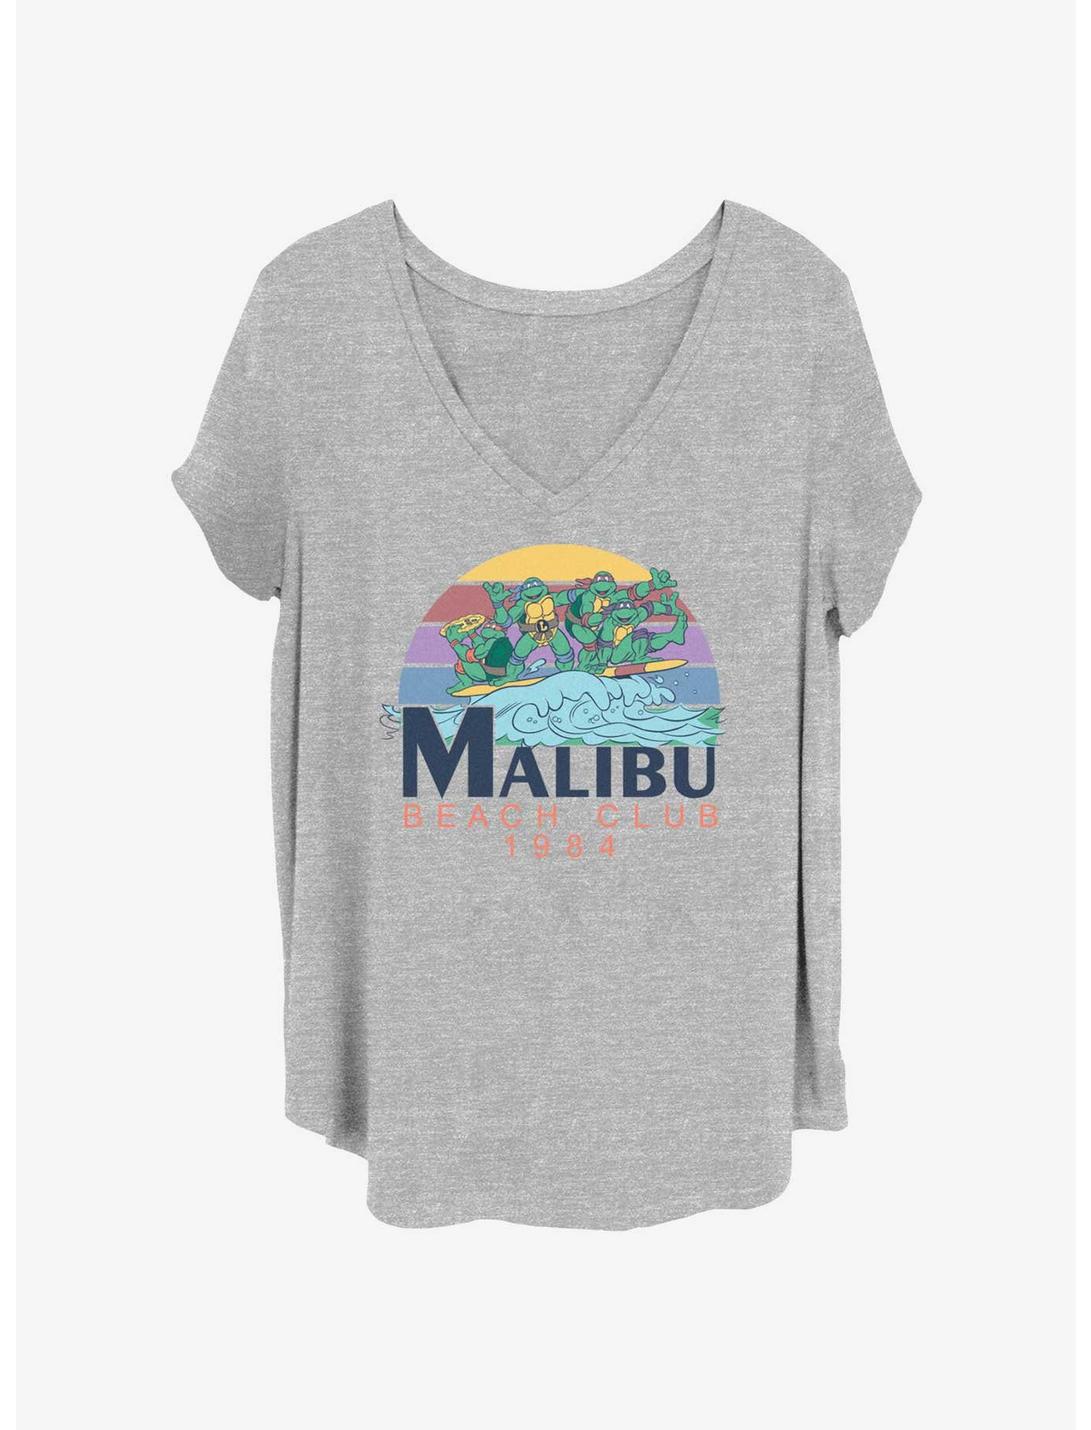 Teenage Mutant Ninja Turtles Malibu Beach Club Womens T-Shirt Plus Size, HEATHER GR, hi-res